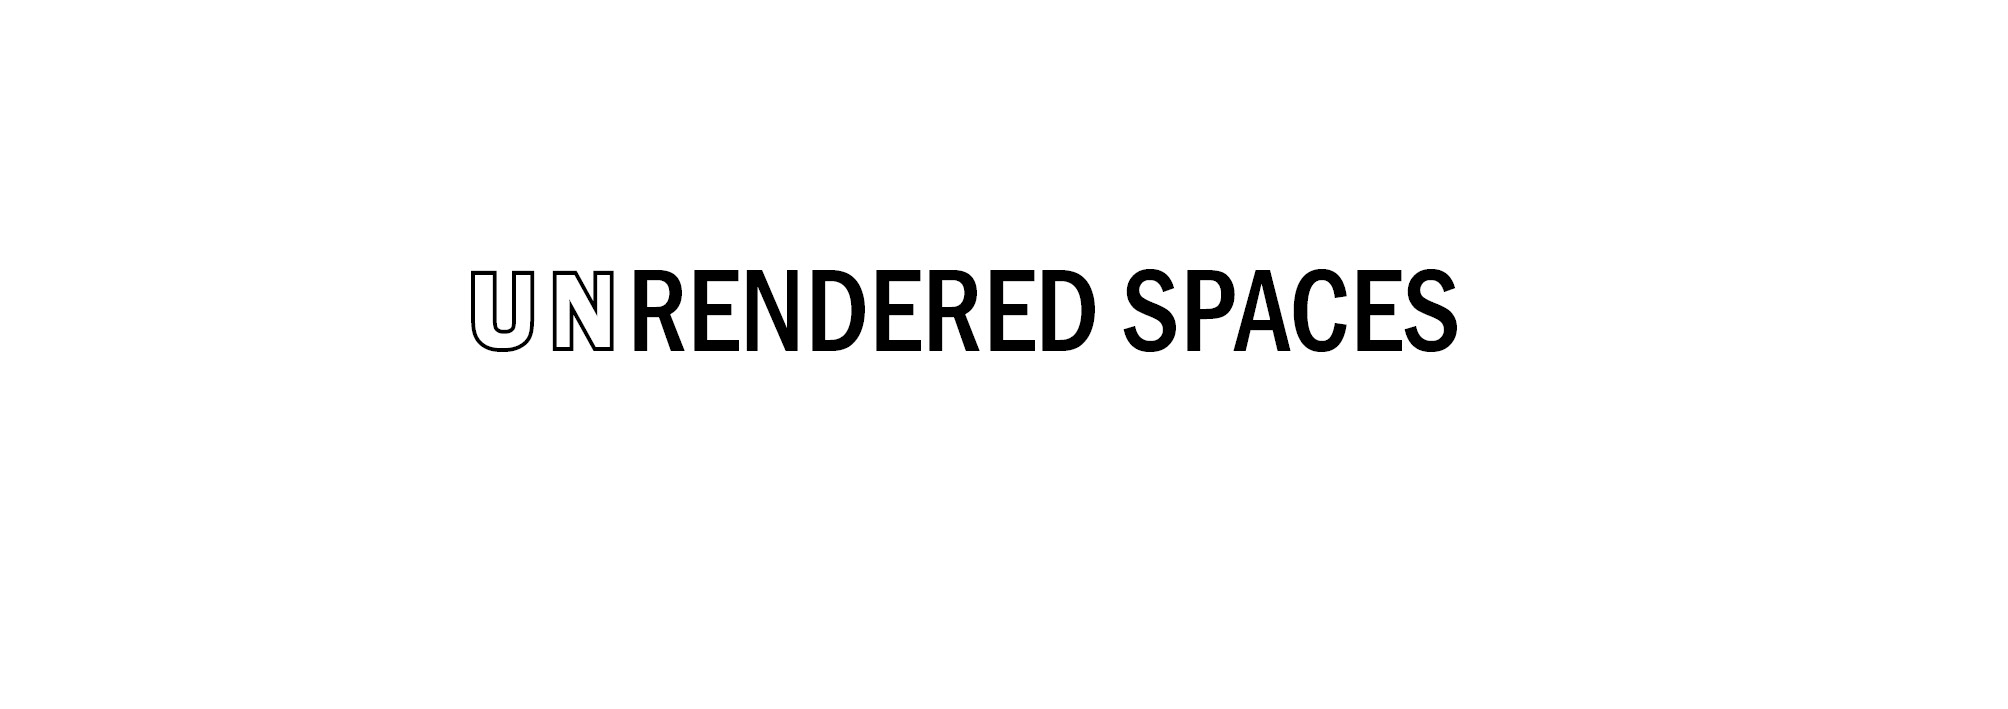 tumblr_static_unrendered_spaces_nazva_red